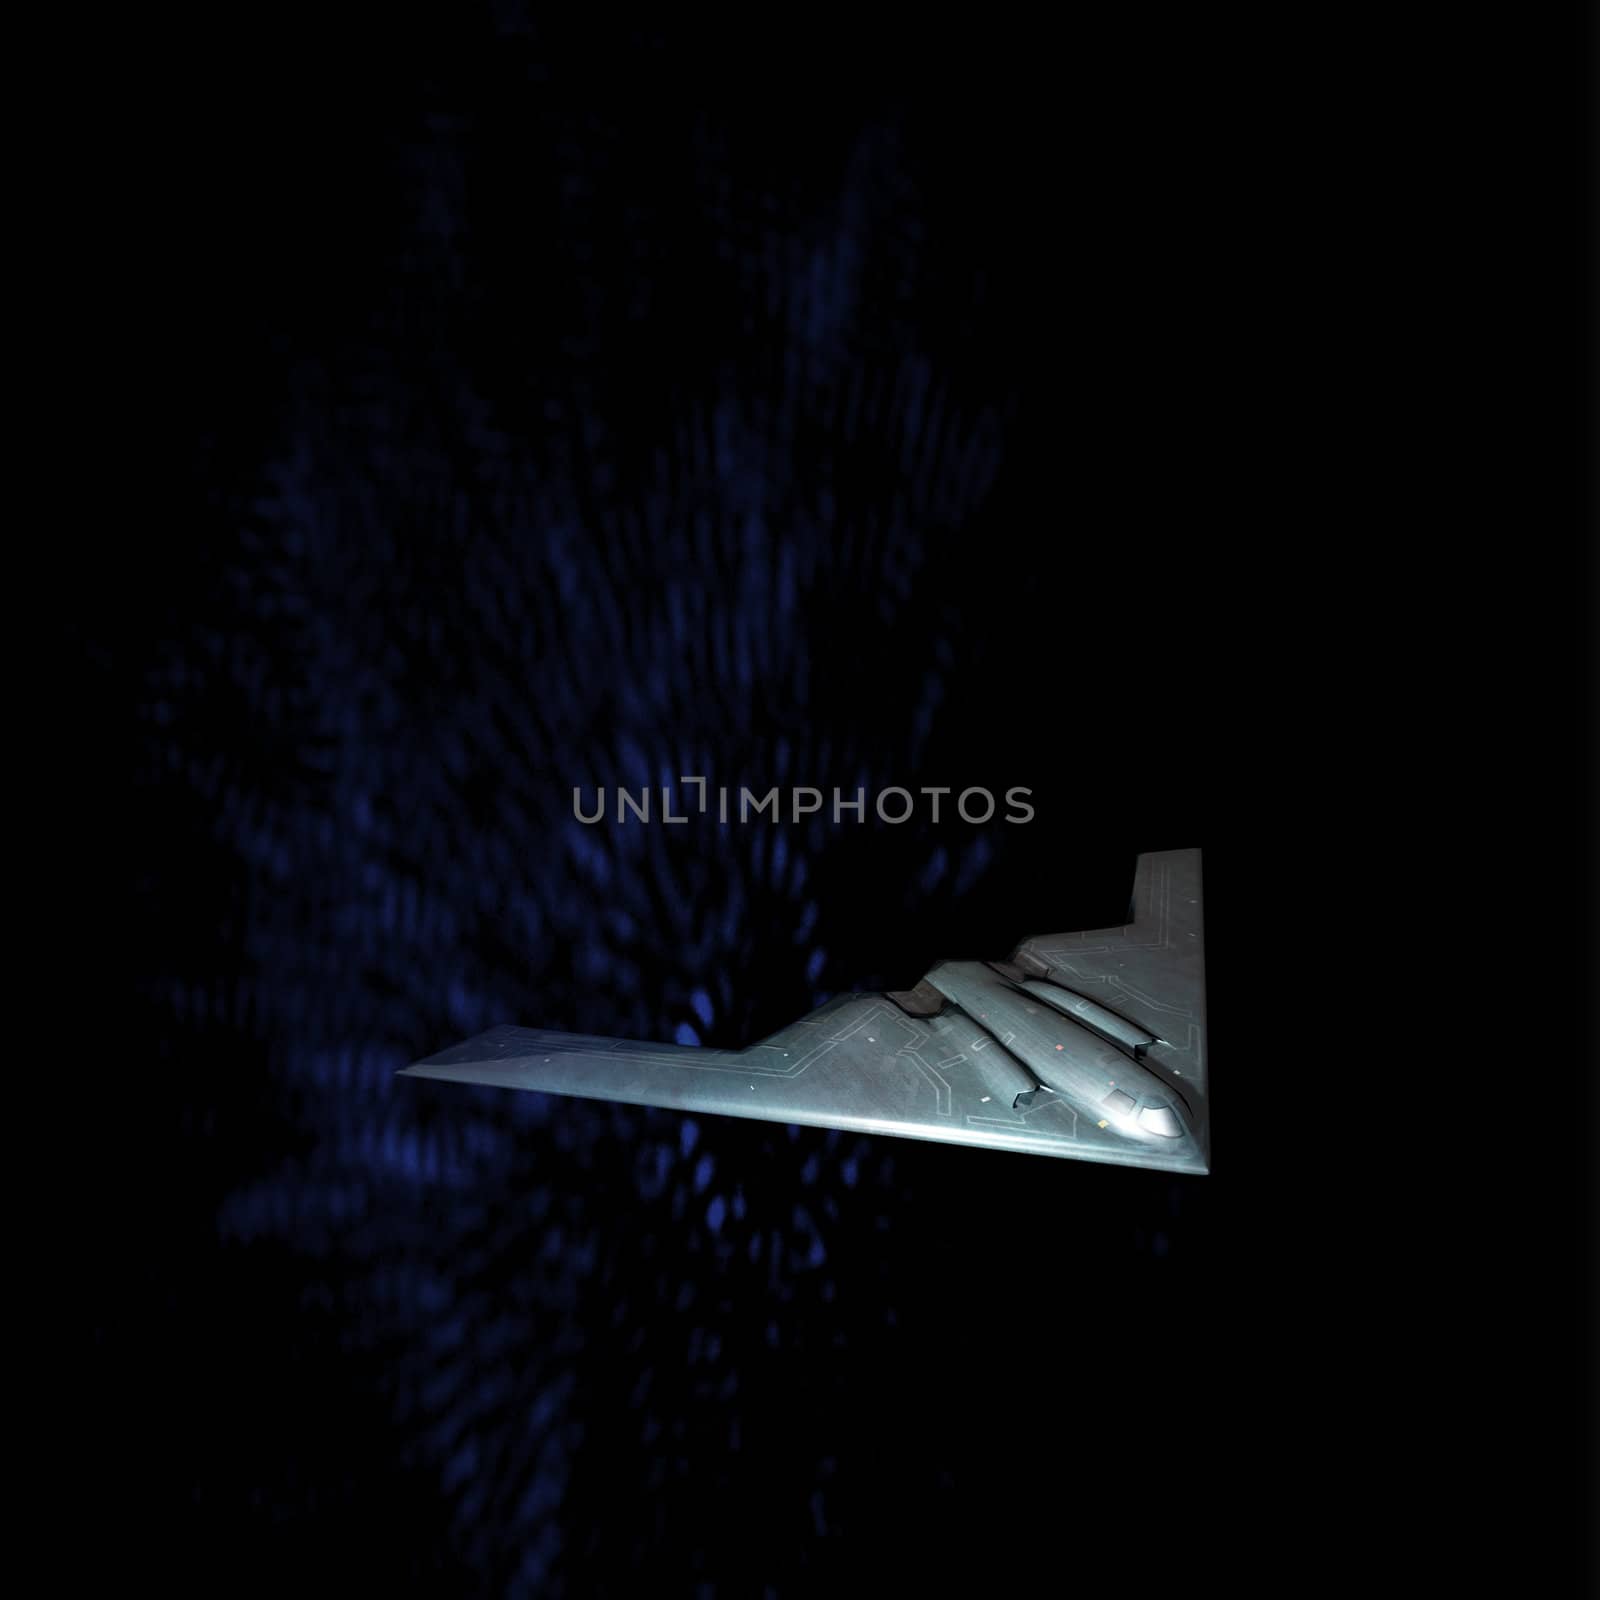 Unpiloted battle plane in fantasy scene with dark blue background by feiillustration